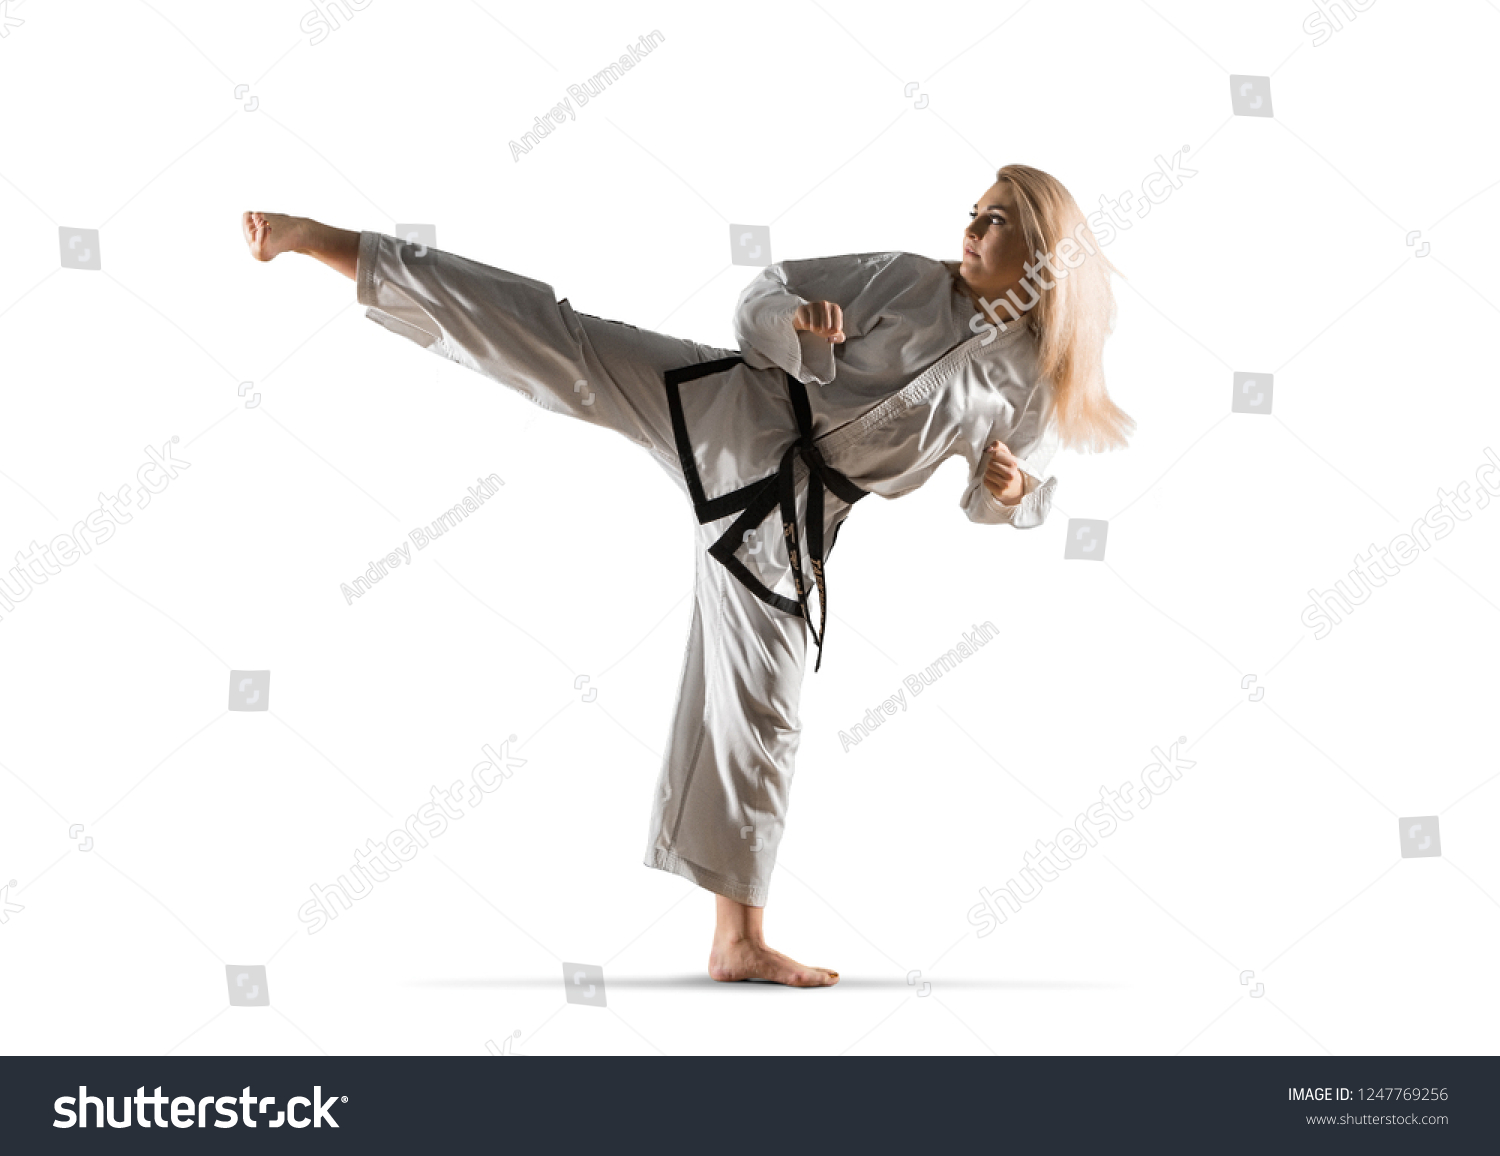 Woman in kimono practicing taekwondo. Isolated on white background #1247769256